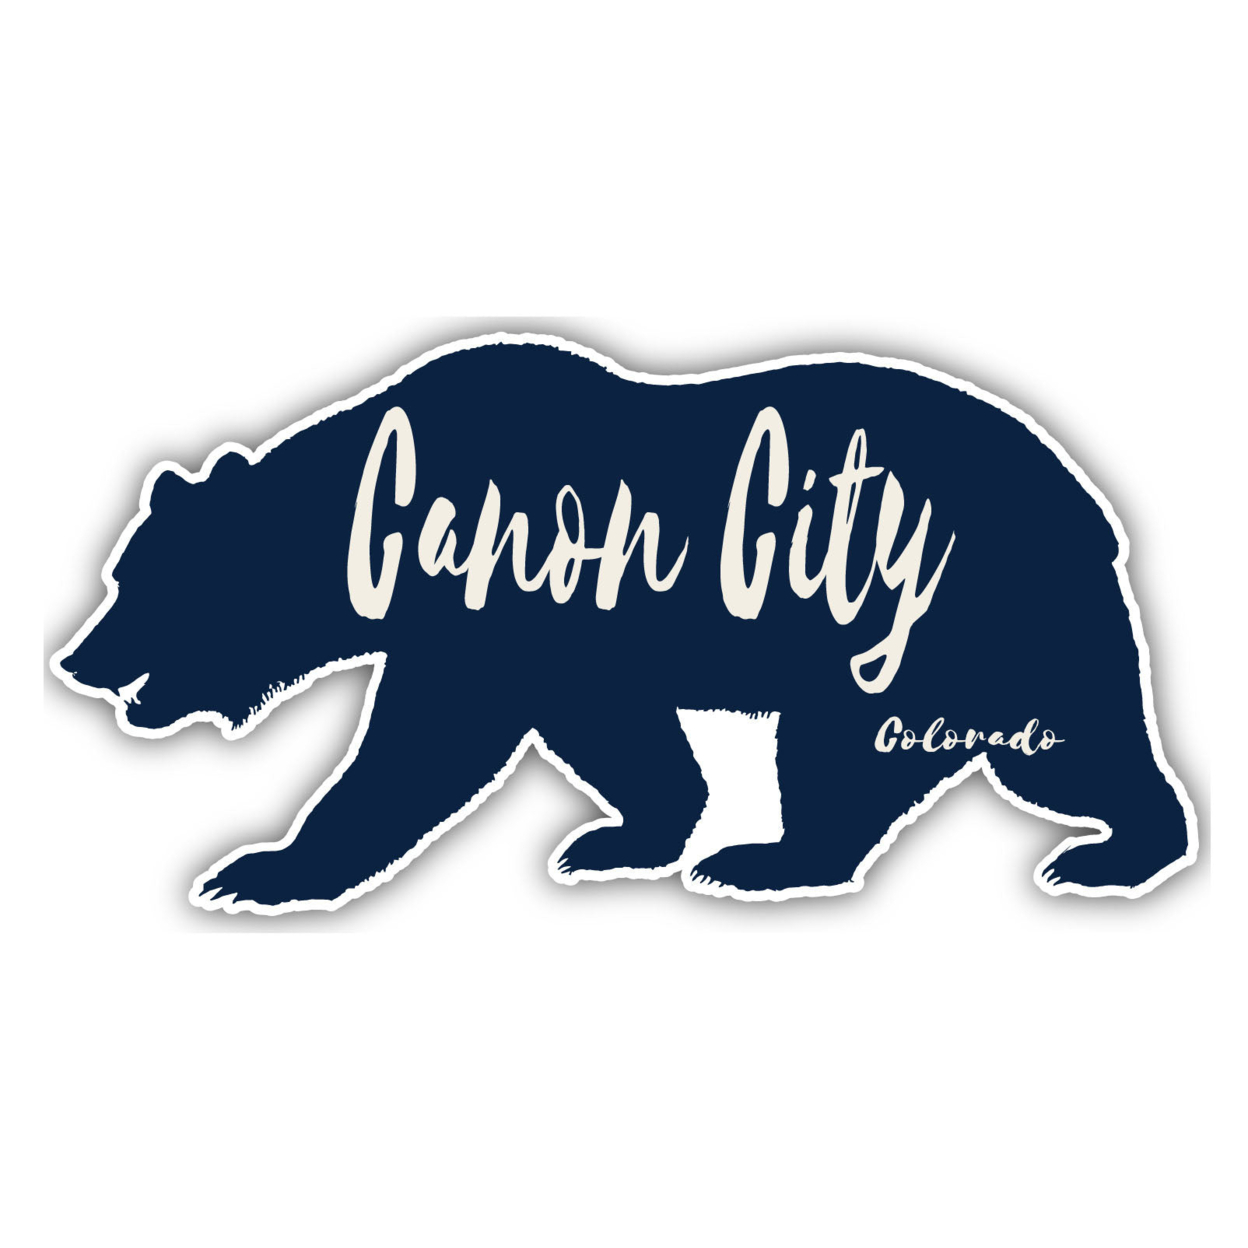 Canon City Colorado Souvenir Decorative Stickers (Choose Theme And Size) - 4-Pack, 12-Inch, Tent